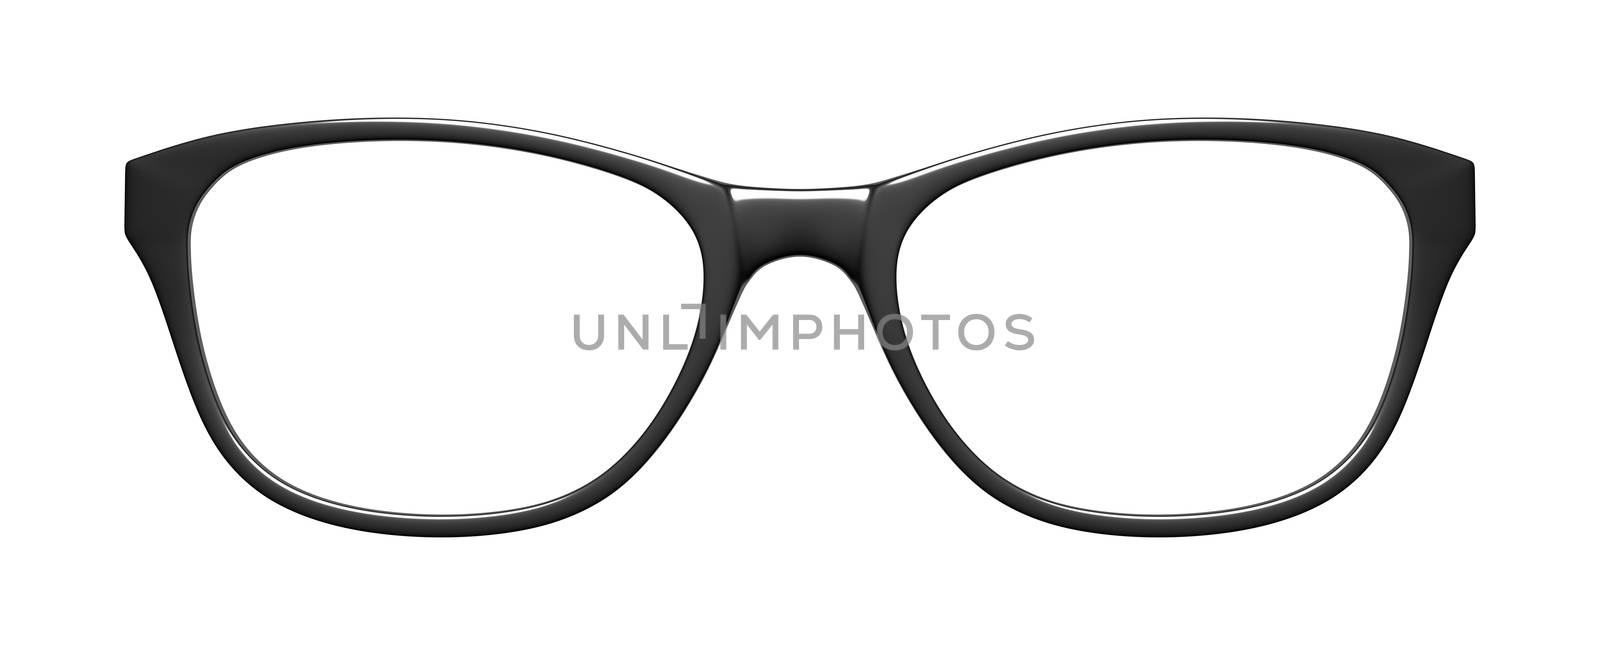 black glasses on white background by magann